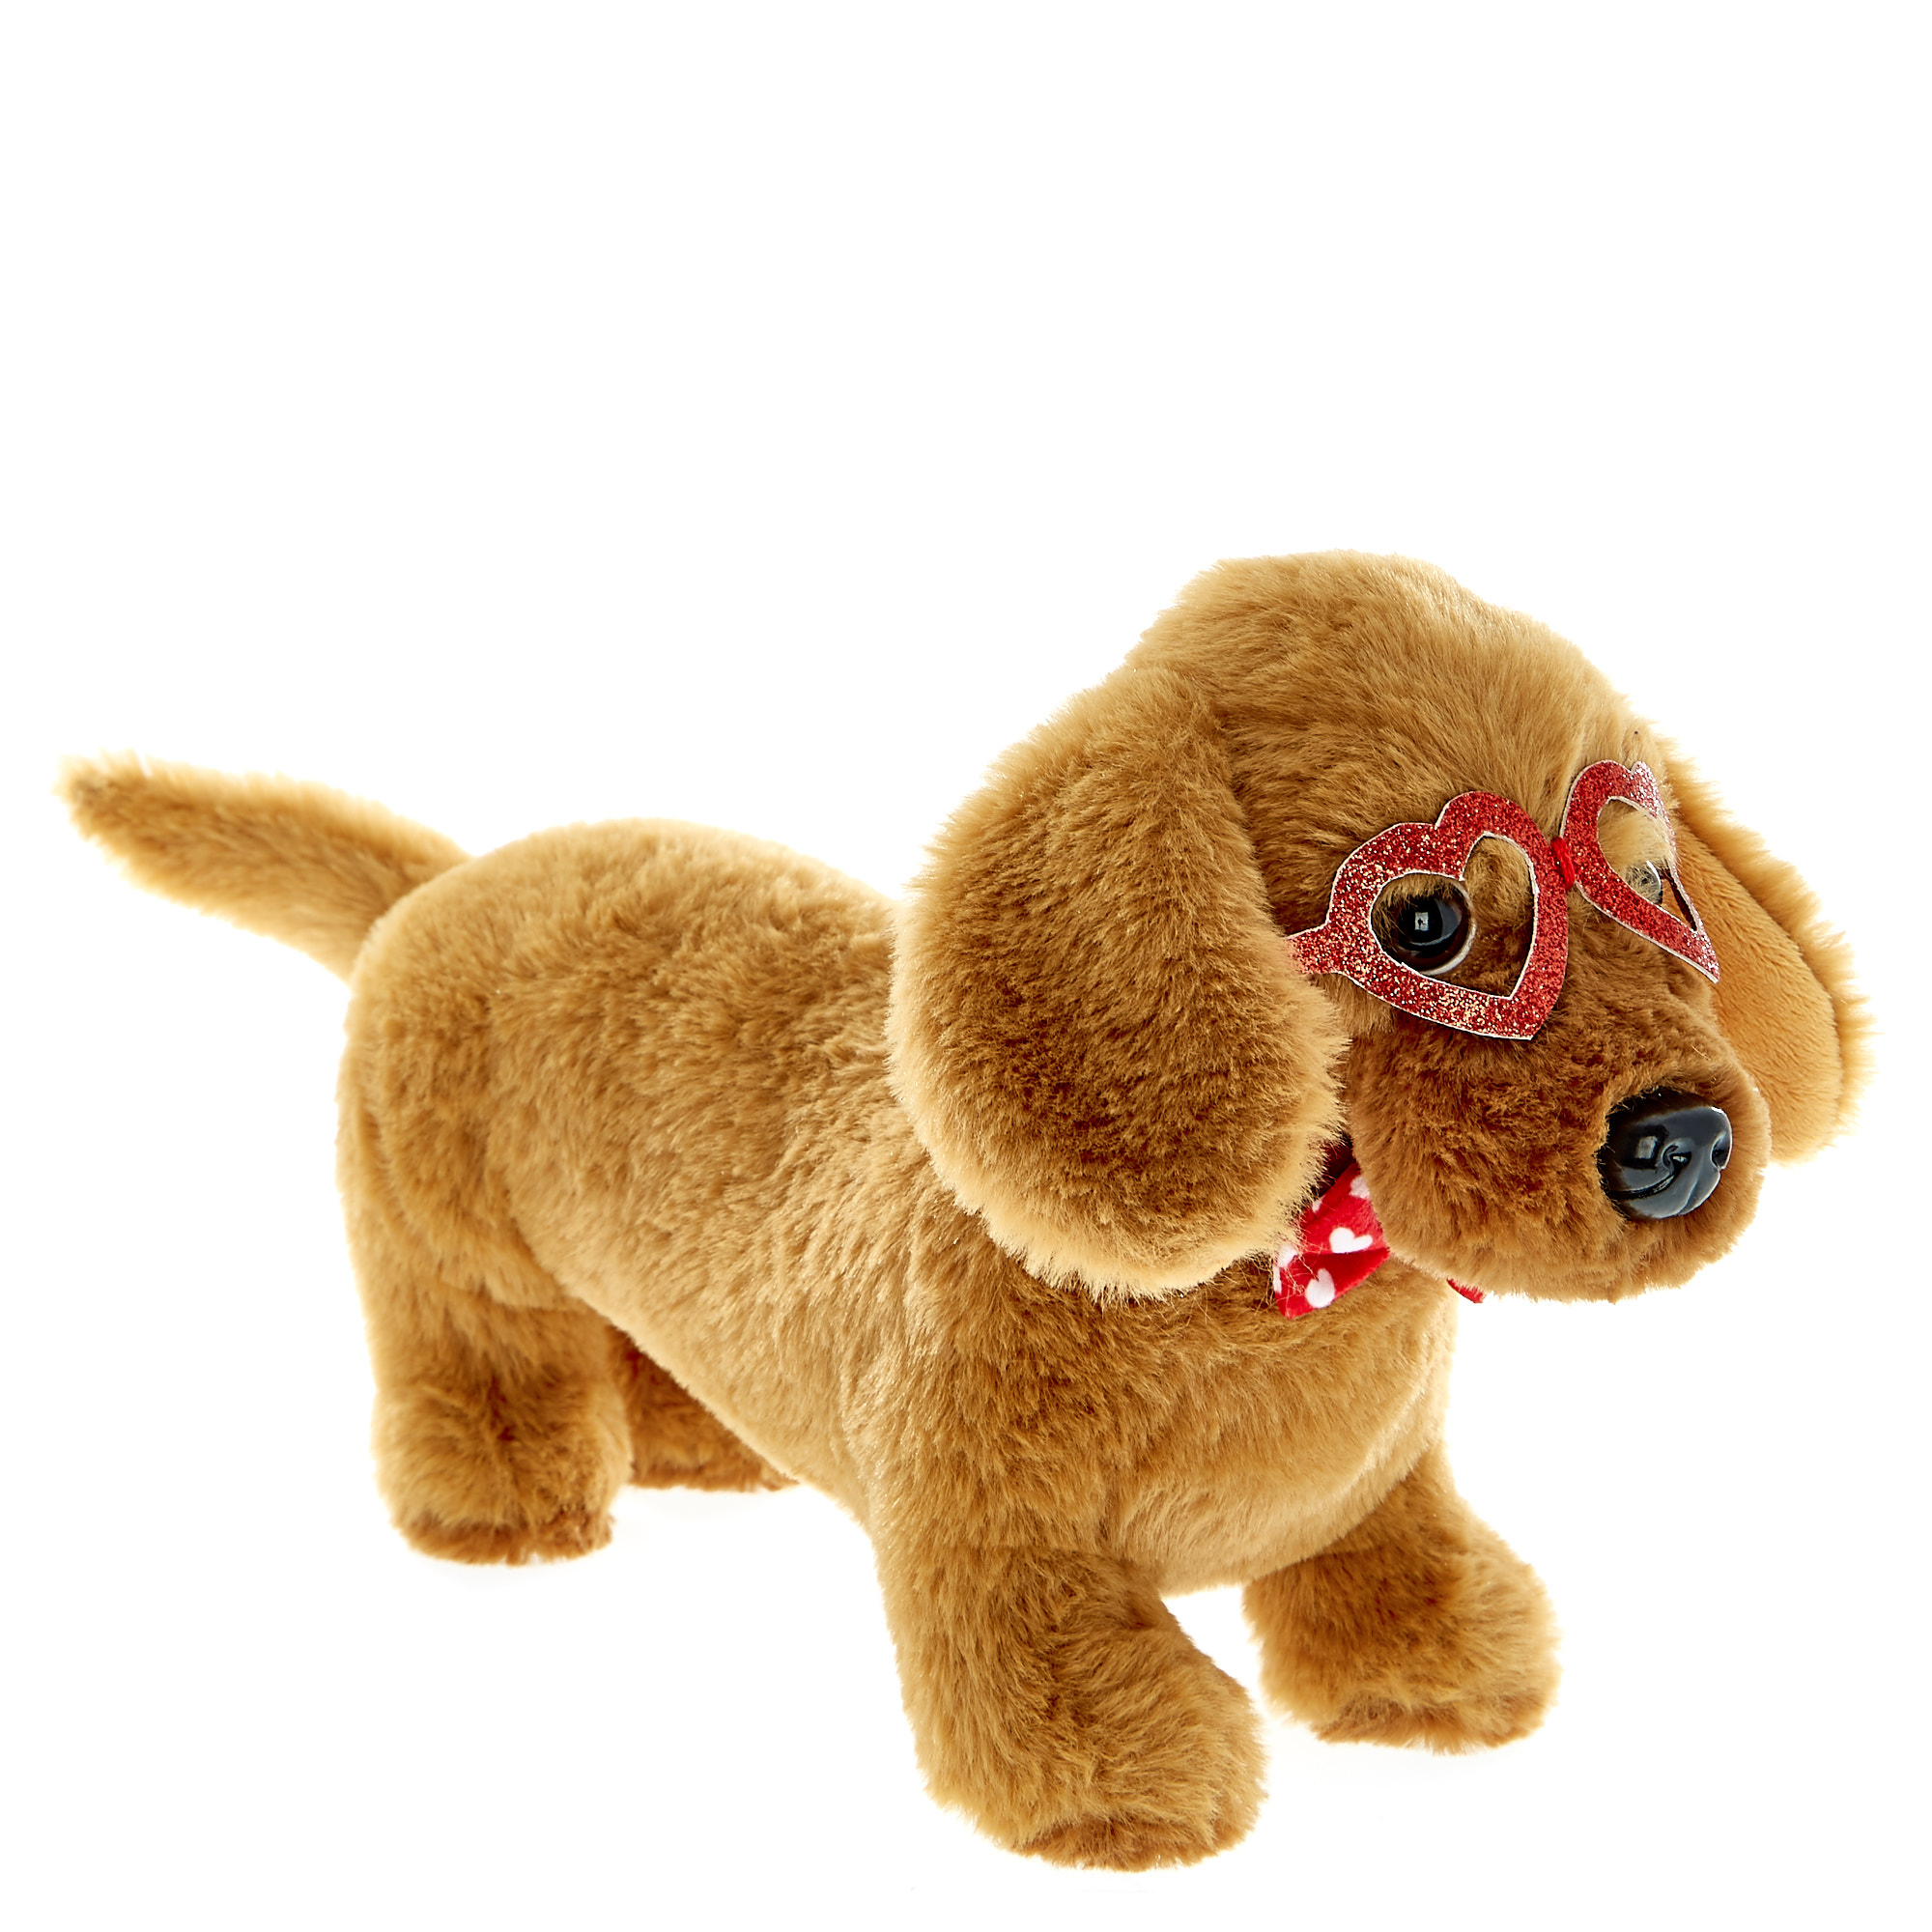 Sausage Dog Soft Toy - Heart Glasses